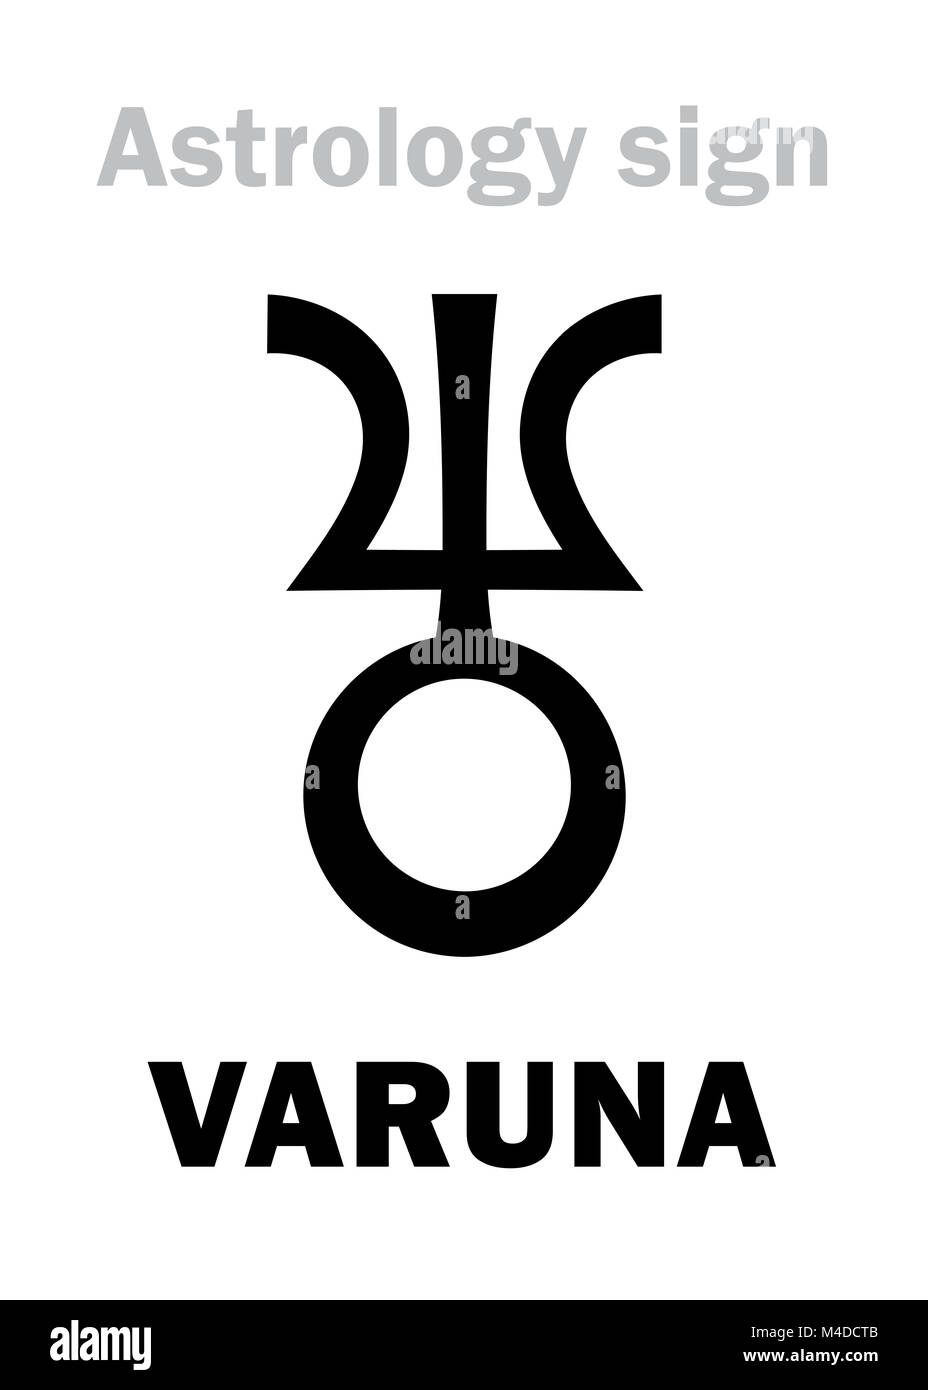 Astrology: planetoid VARUNA Stock Photo